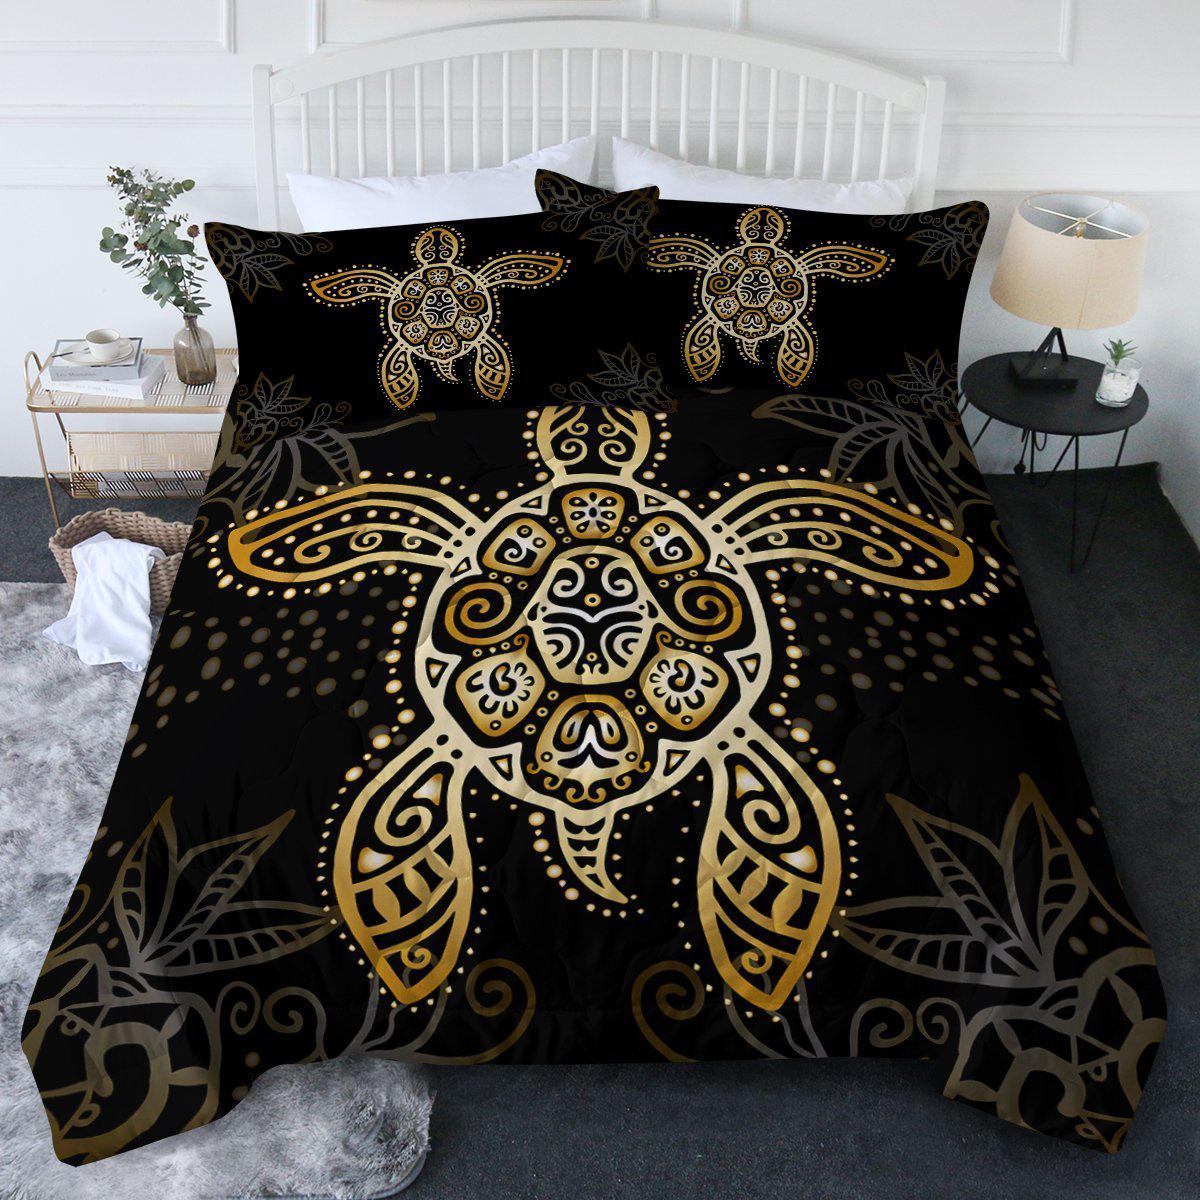 The Golden Sea Turtle Comforter Set